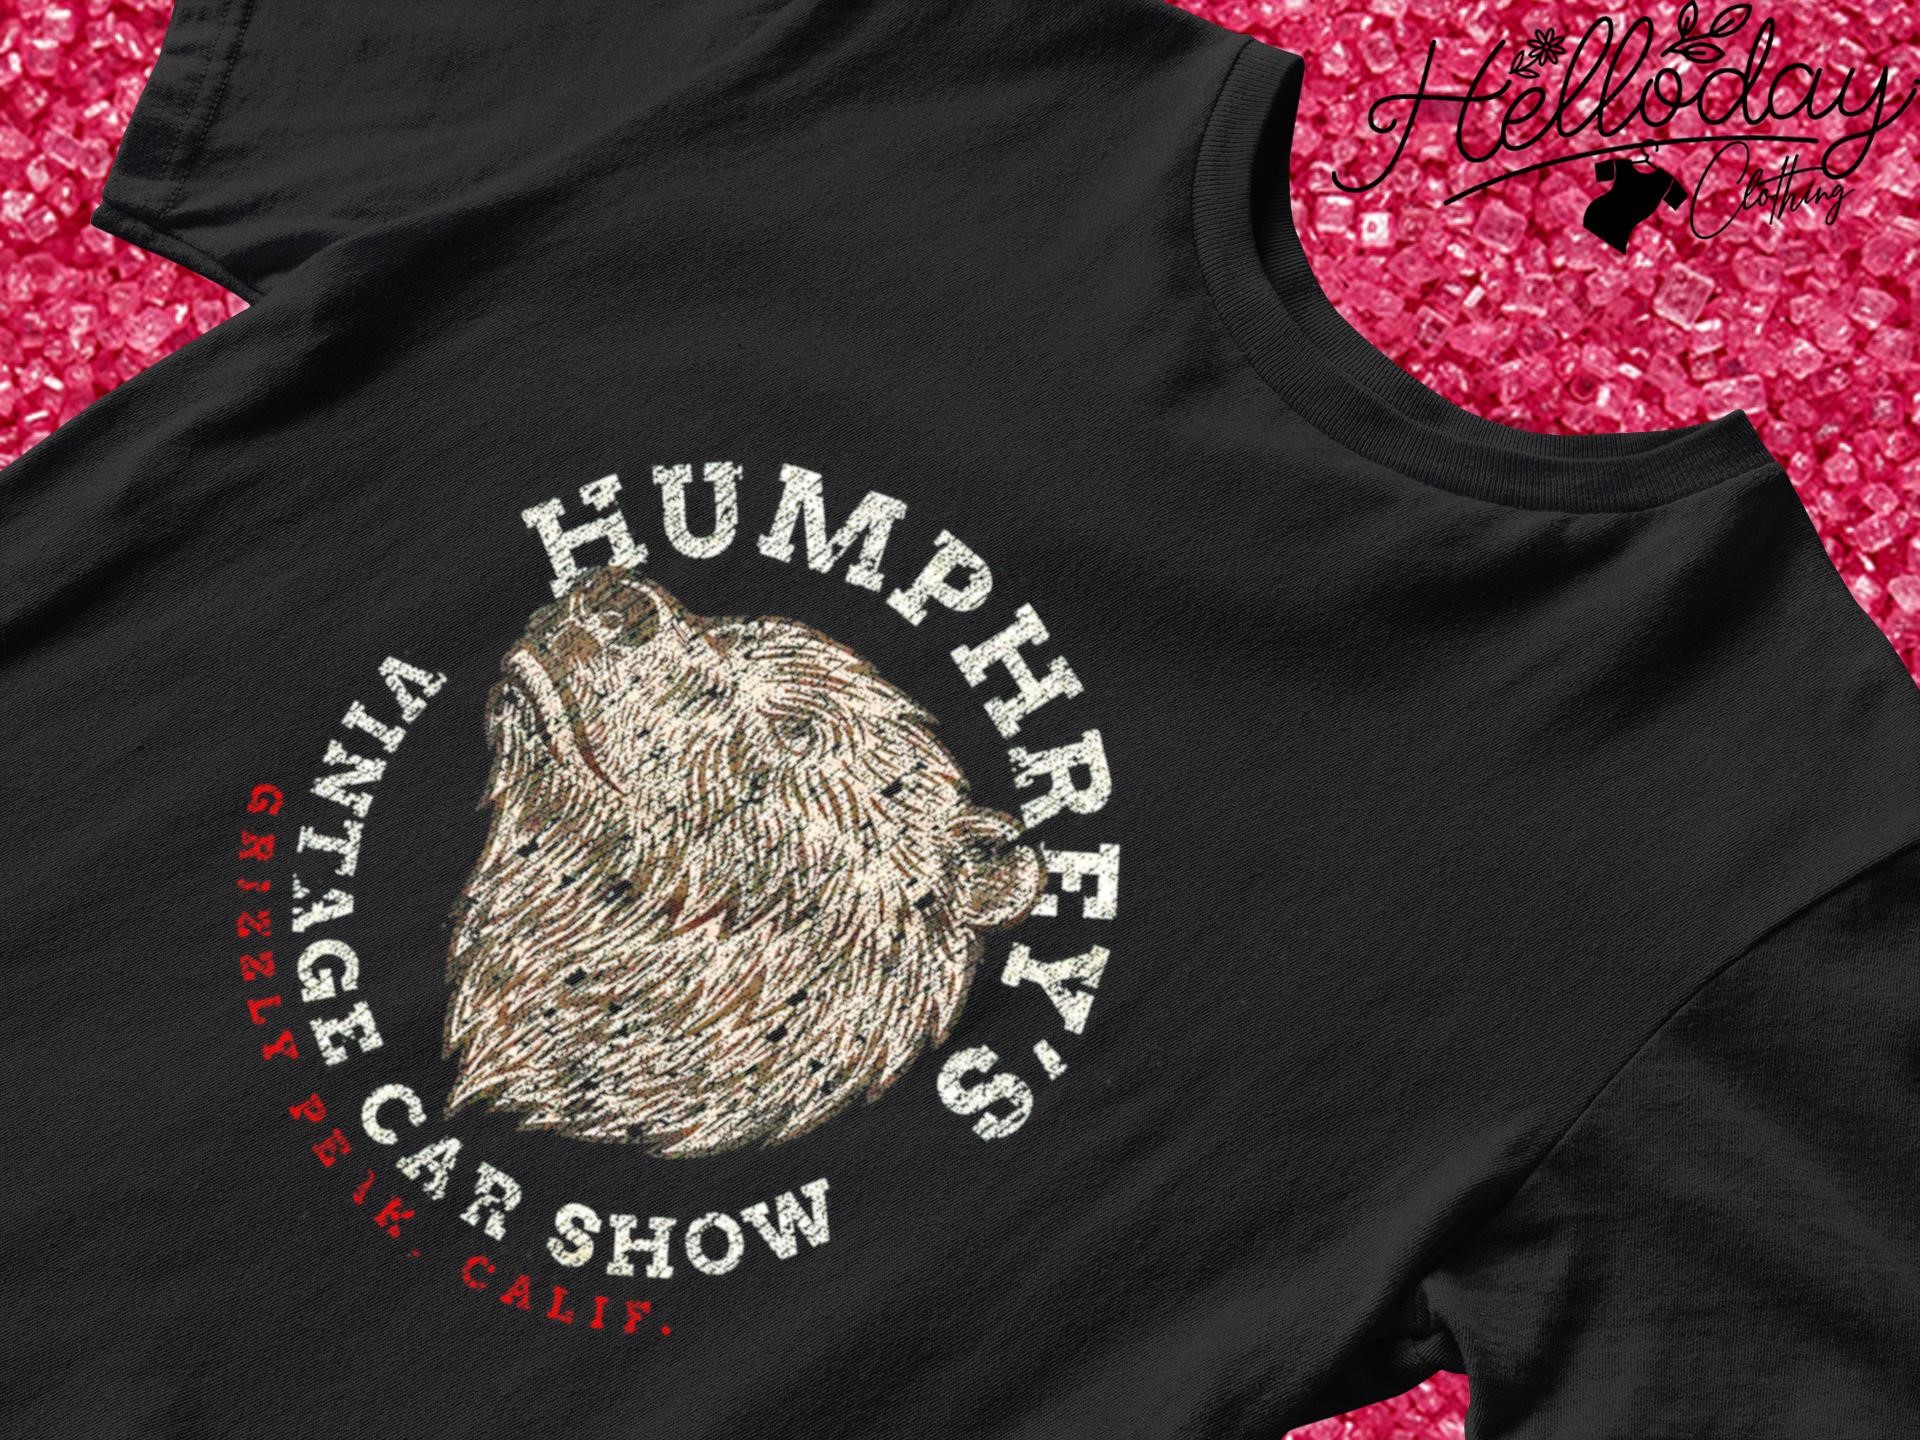 Humphrey's vintage car show shirt